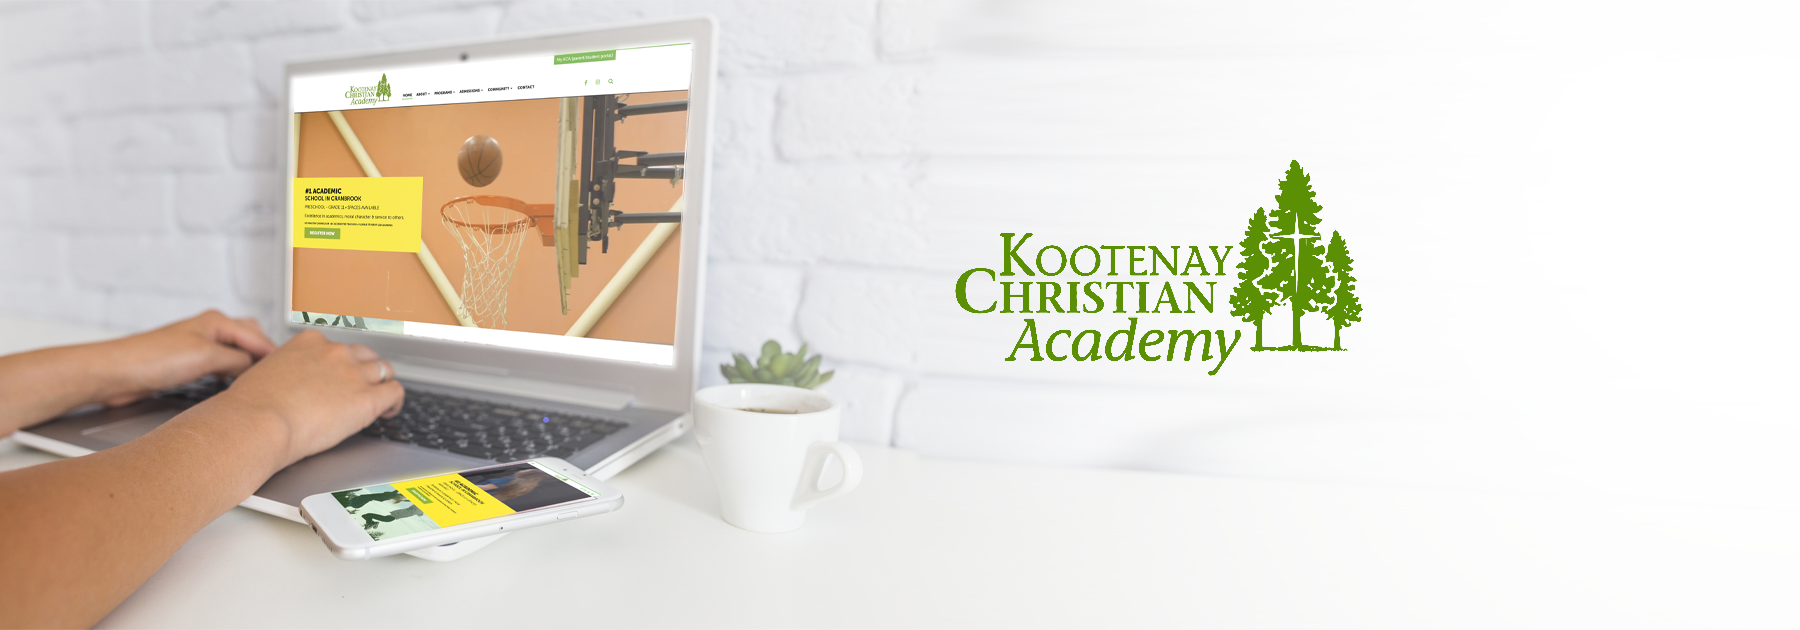 Kootenay Christian Academy